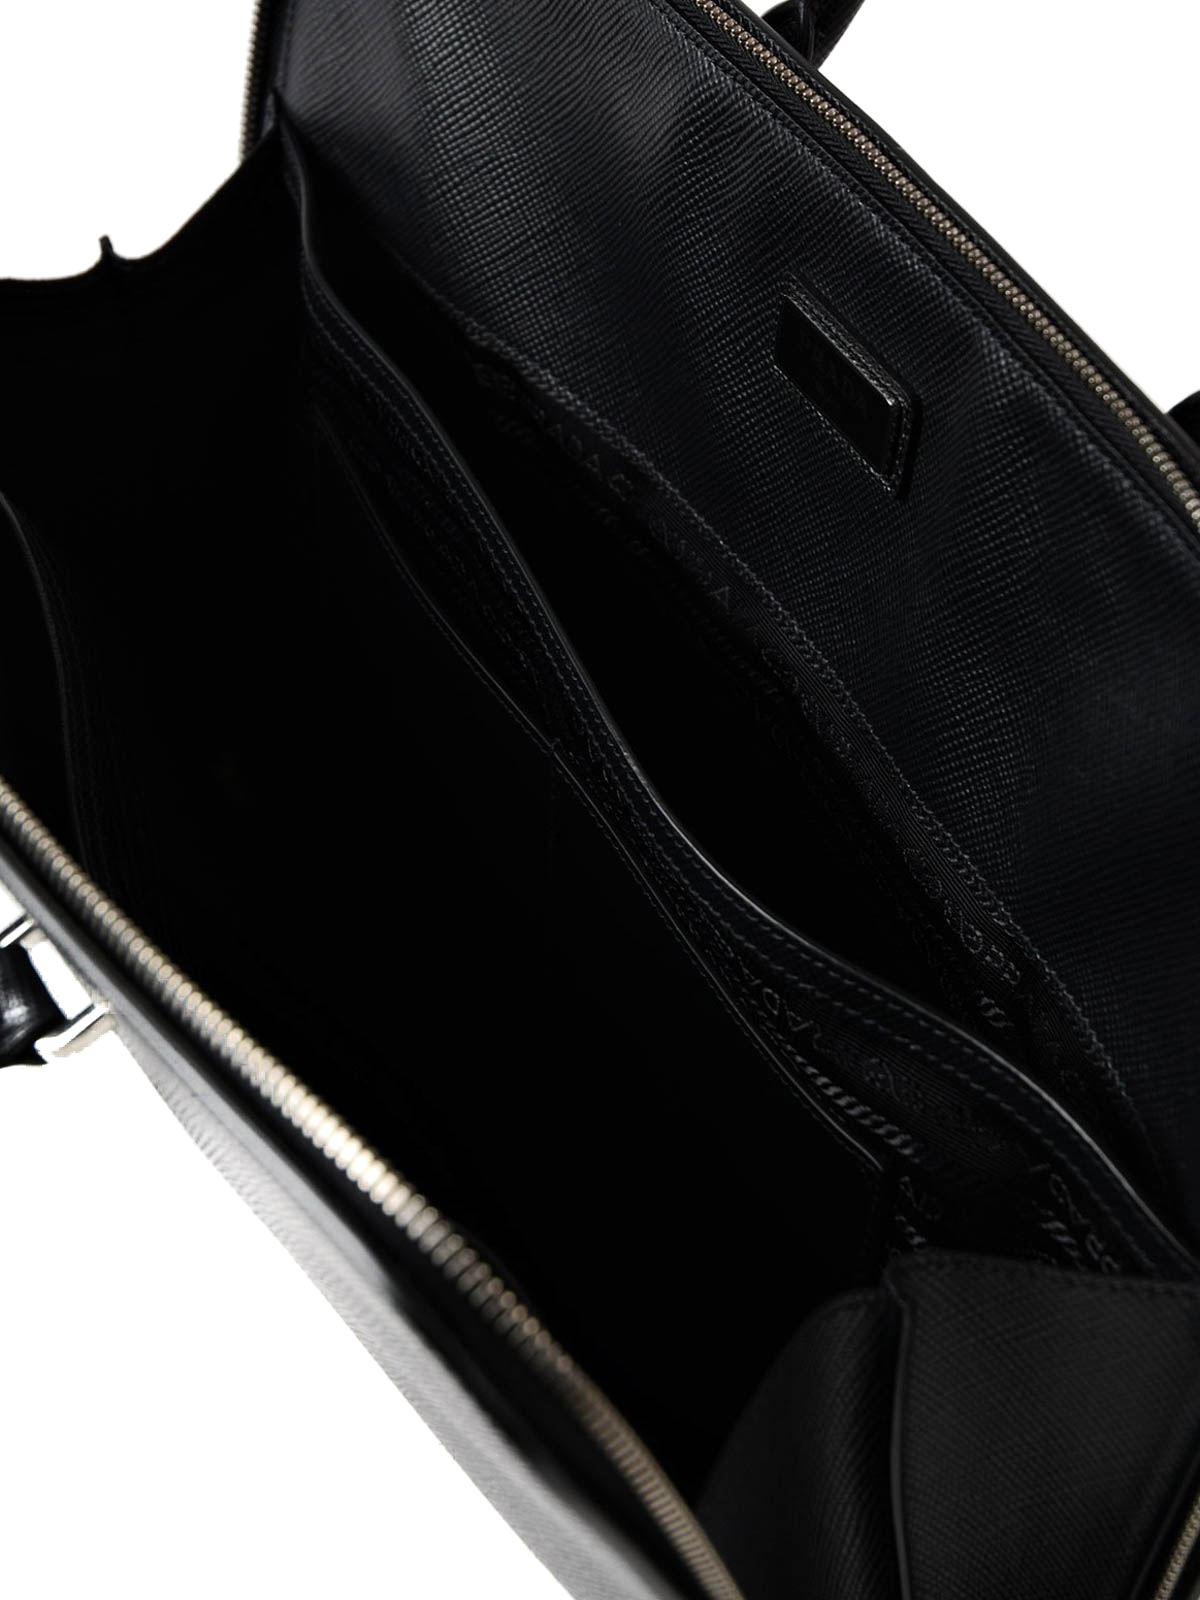 Prada Saffiano Laptop Case in Black for Men